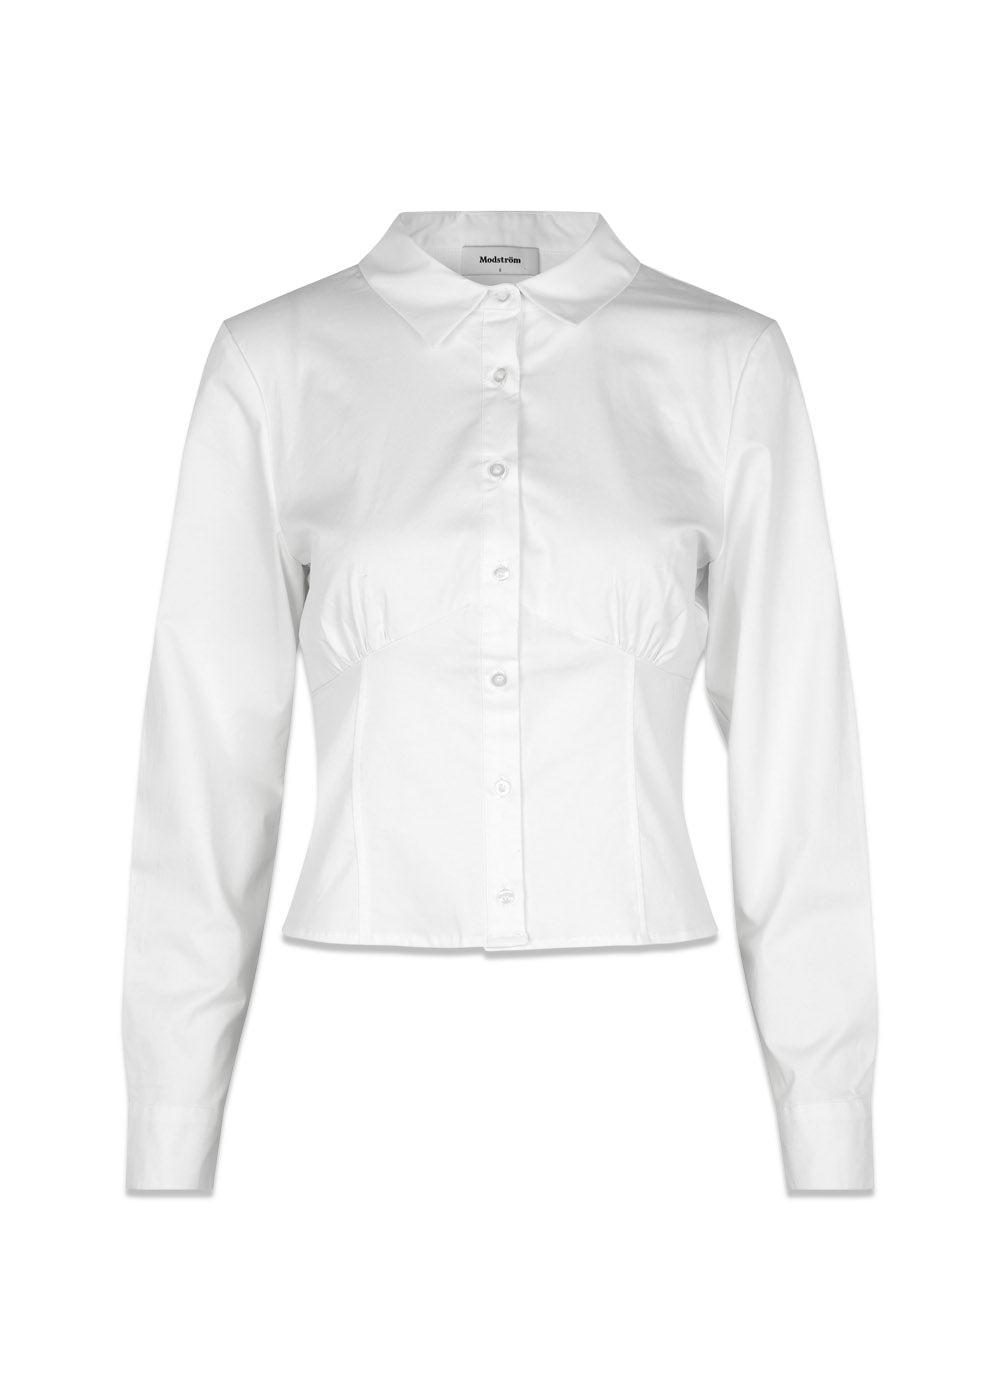 Modströms HarrisonMD shirt - Soft White. Køb shirts her.